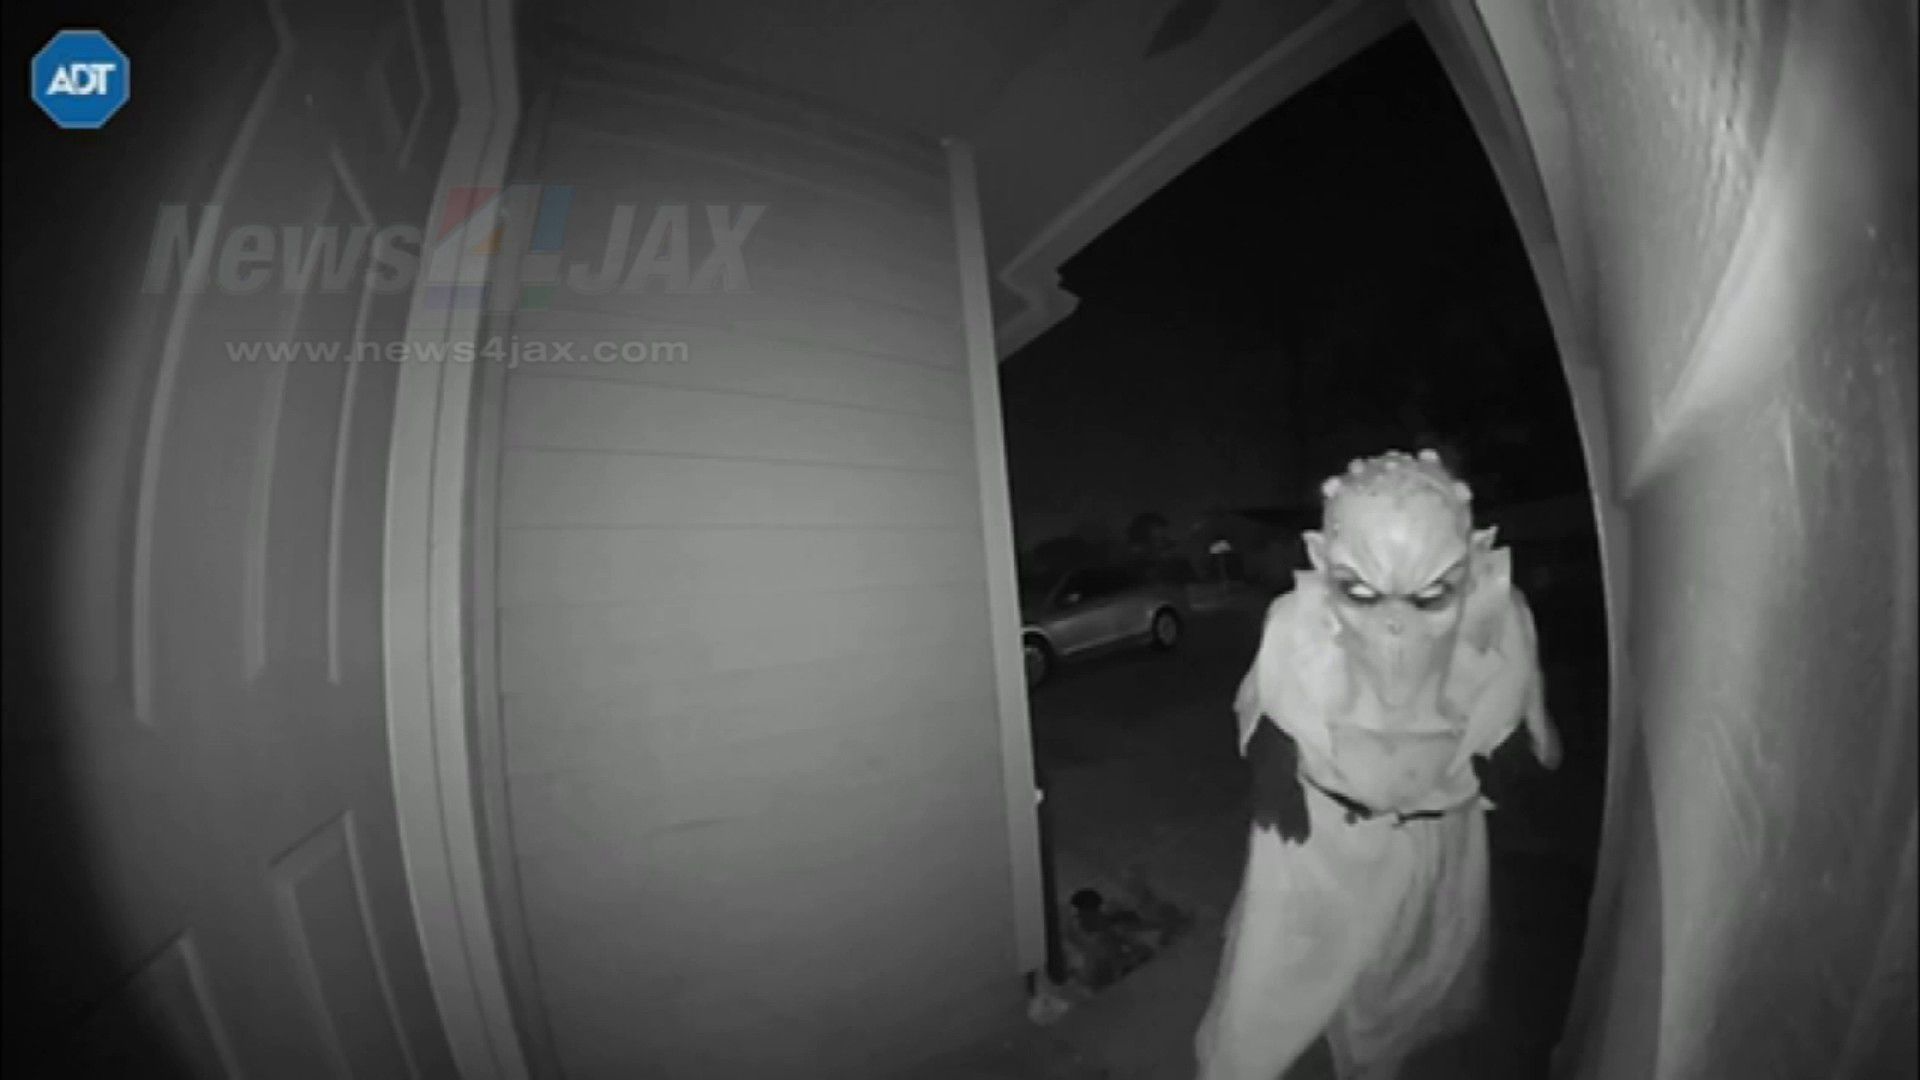 Redding dagboek voor Otherworldly: Person dressed as extraterrestrial swipes package from  Jacksonville home